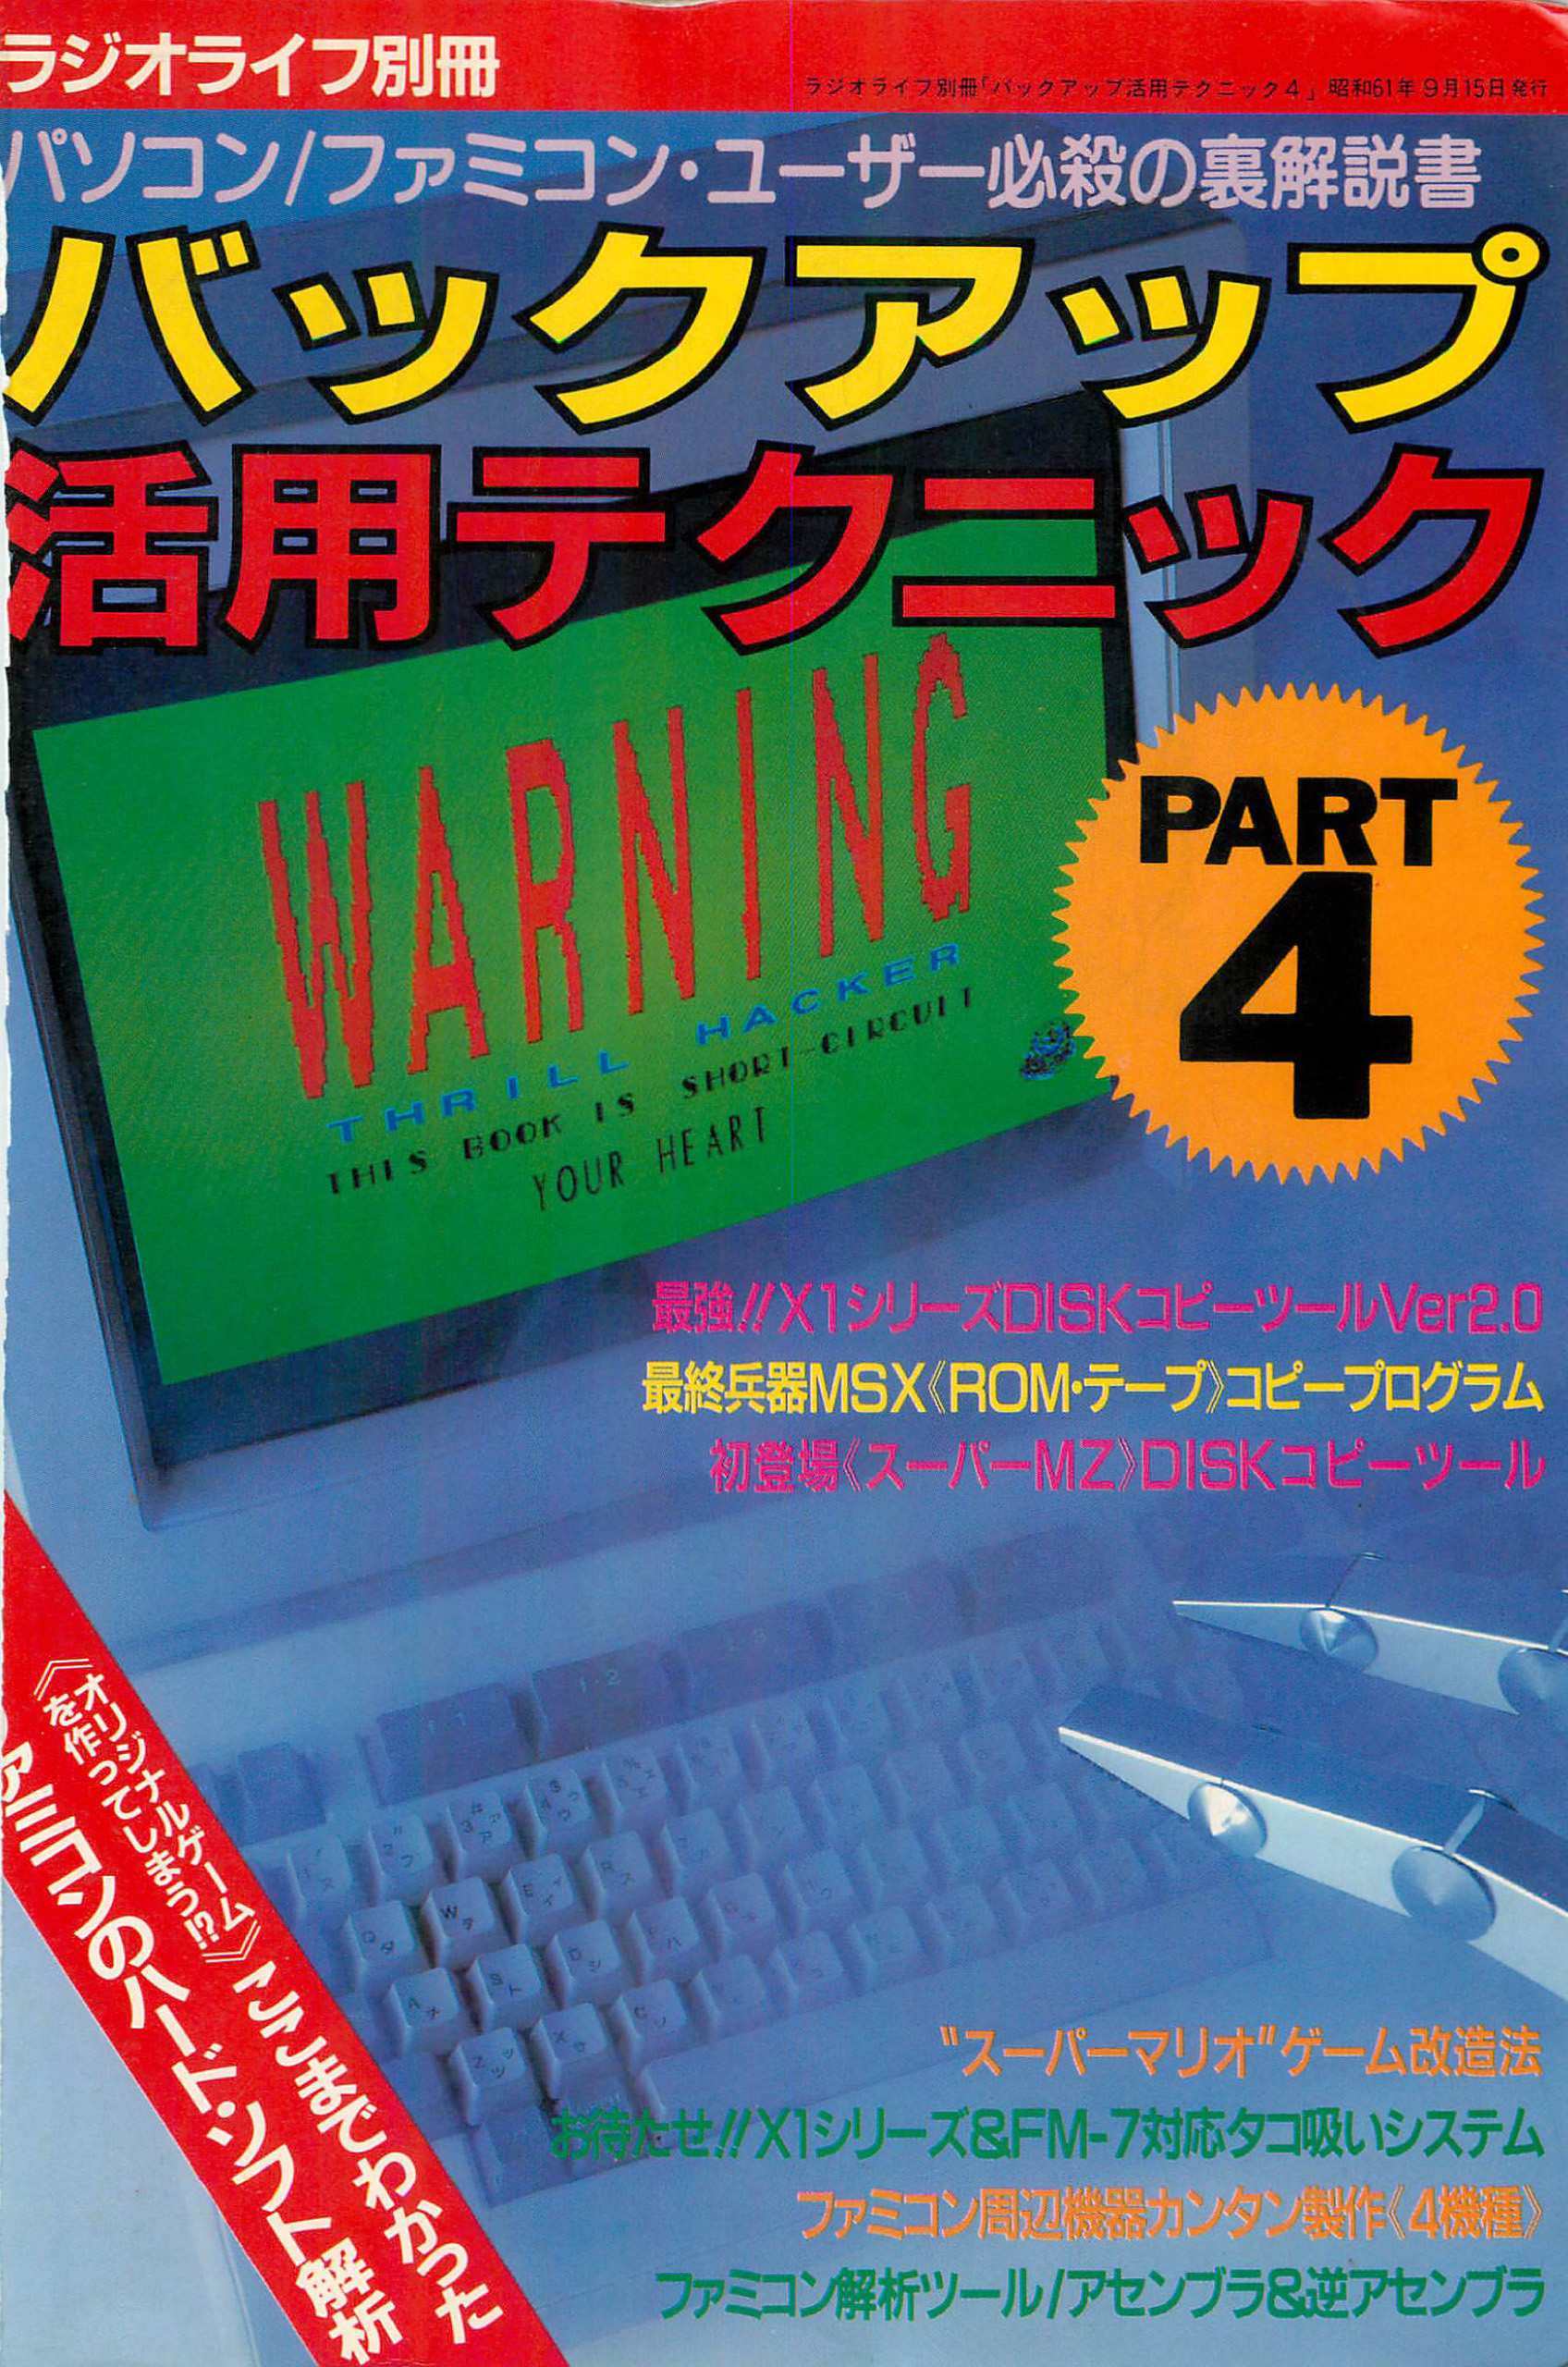 MSX TurboR専用ソフト 幻影都市 ユーザーディスク付き - PCゲーム